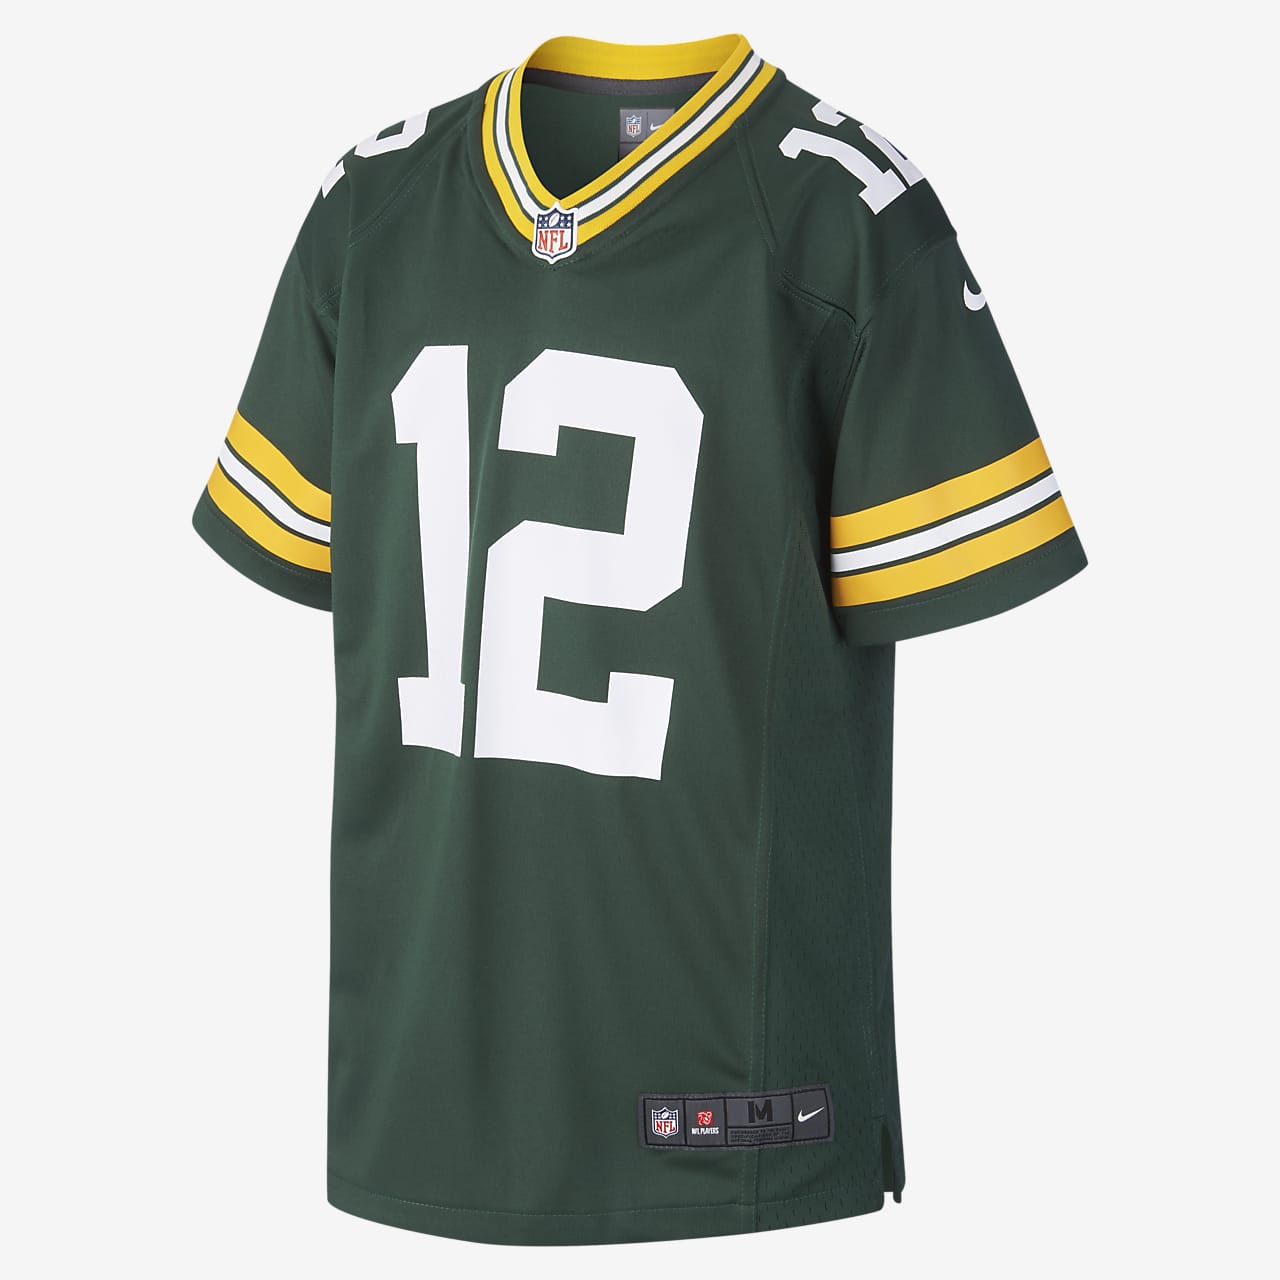 NFL Green Bay Packers Game Jersey (Aaron Rodgers) Camiseta de fútbol americano - Niño/a.